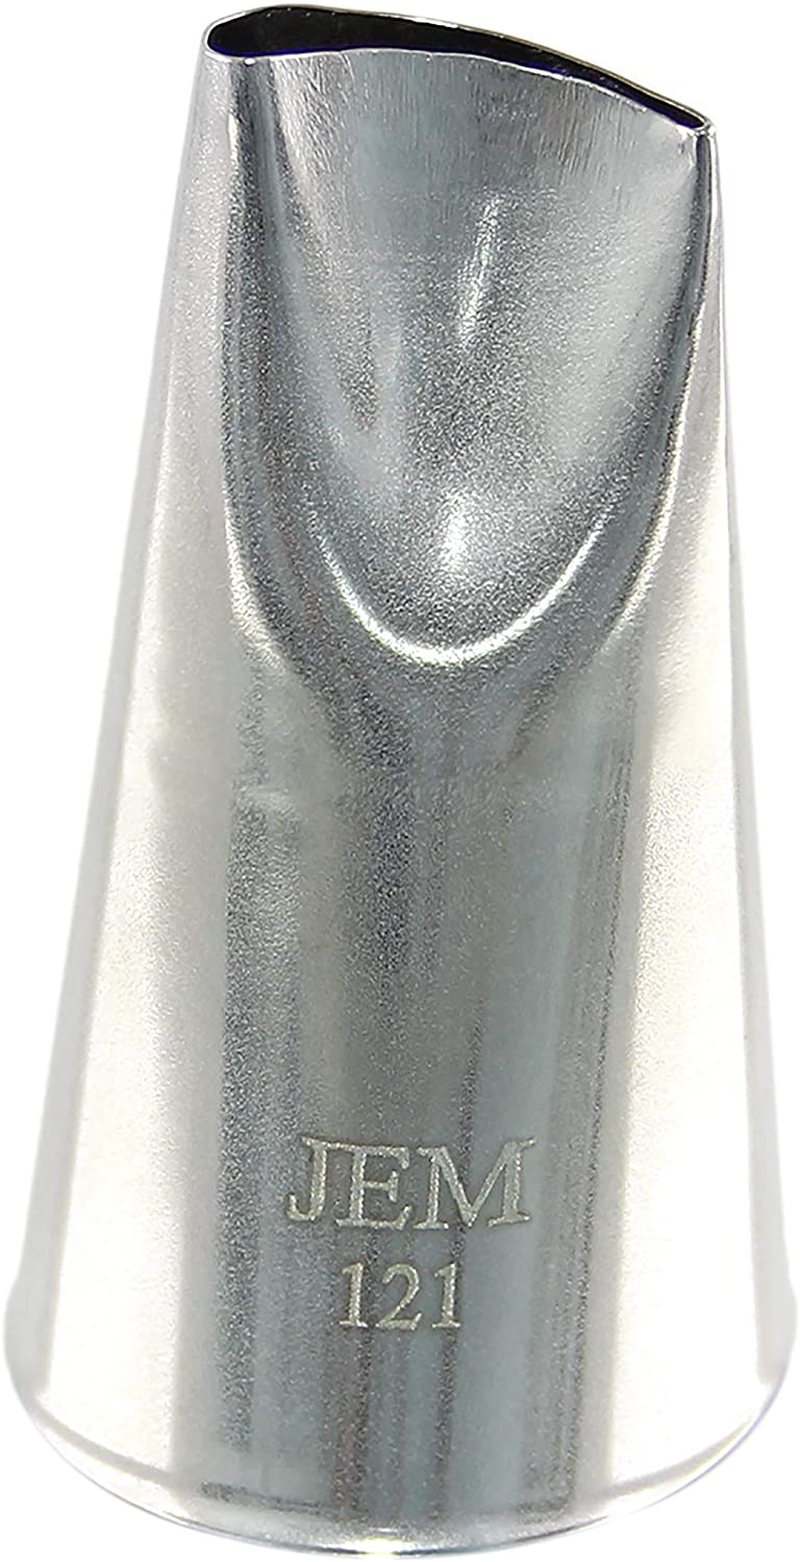 JEM Large Petal/Ruffle Piping Nozzle-Cake Decorating Tip #116, Standard, Silver